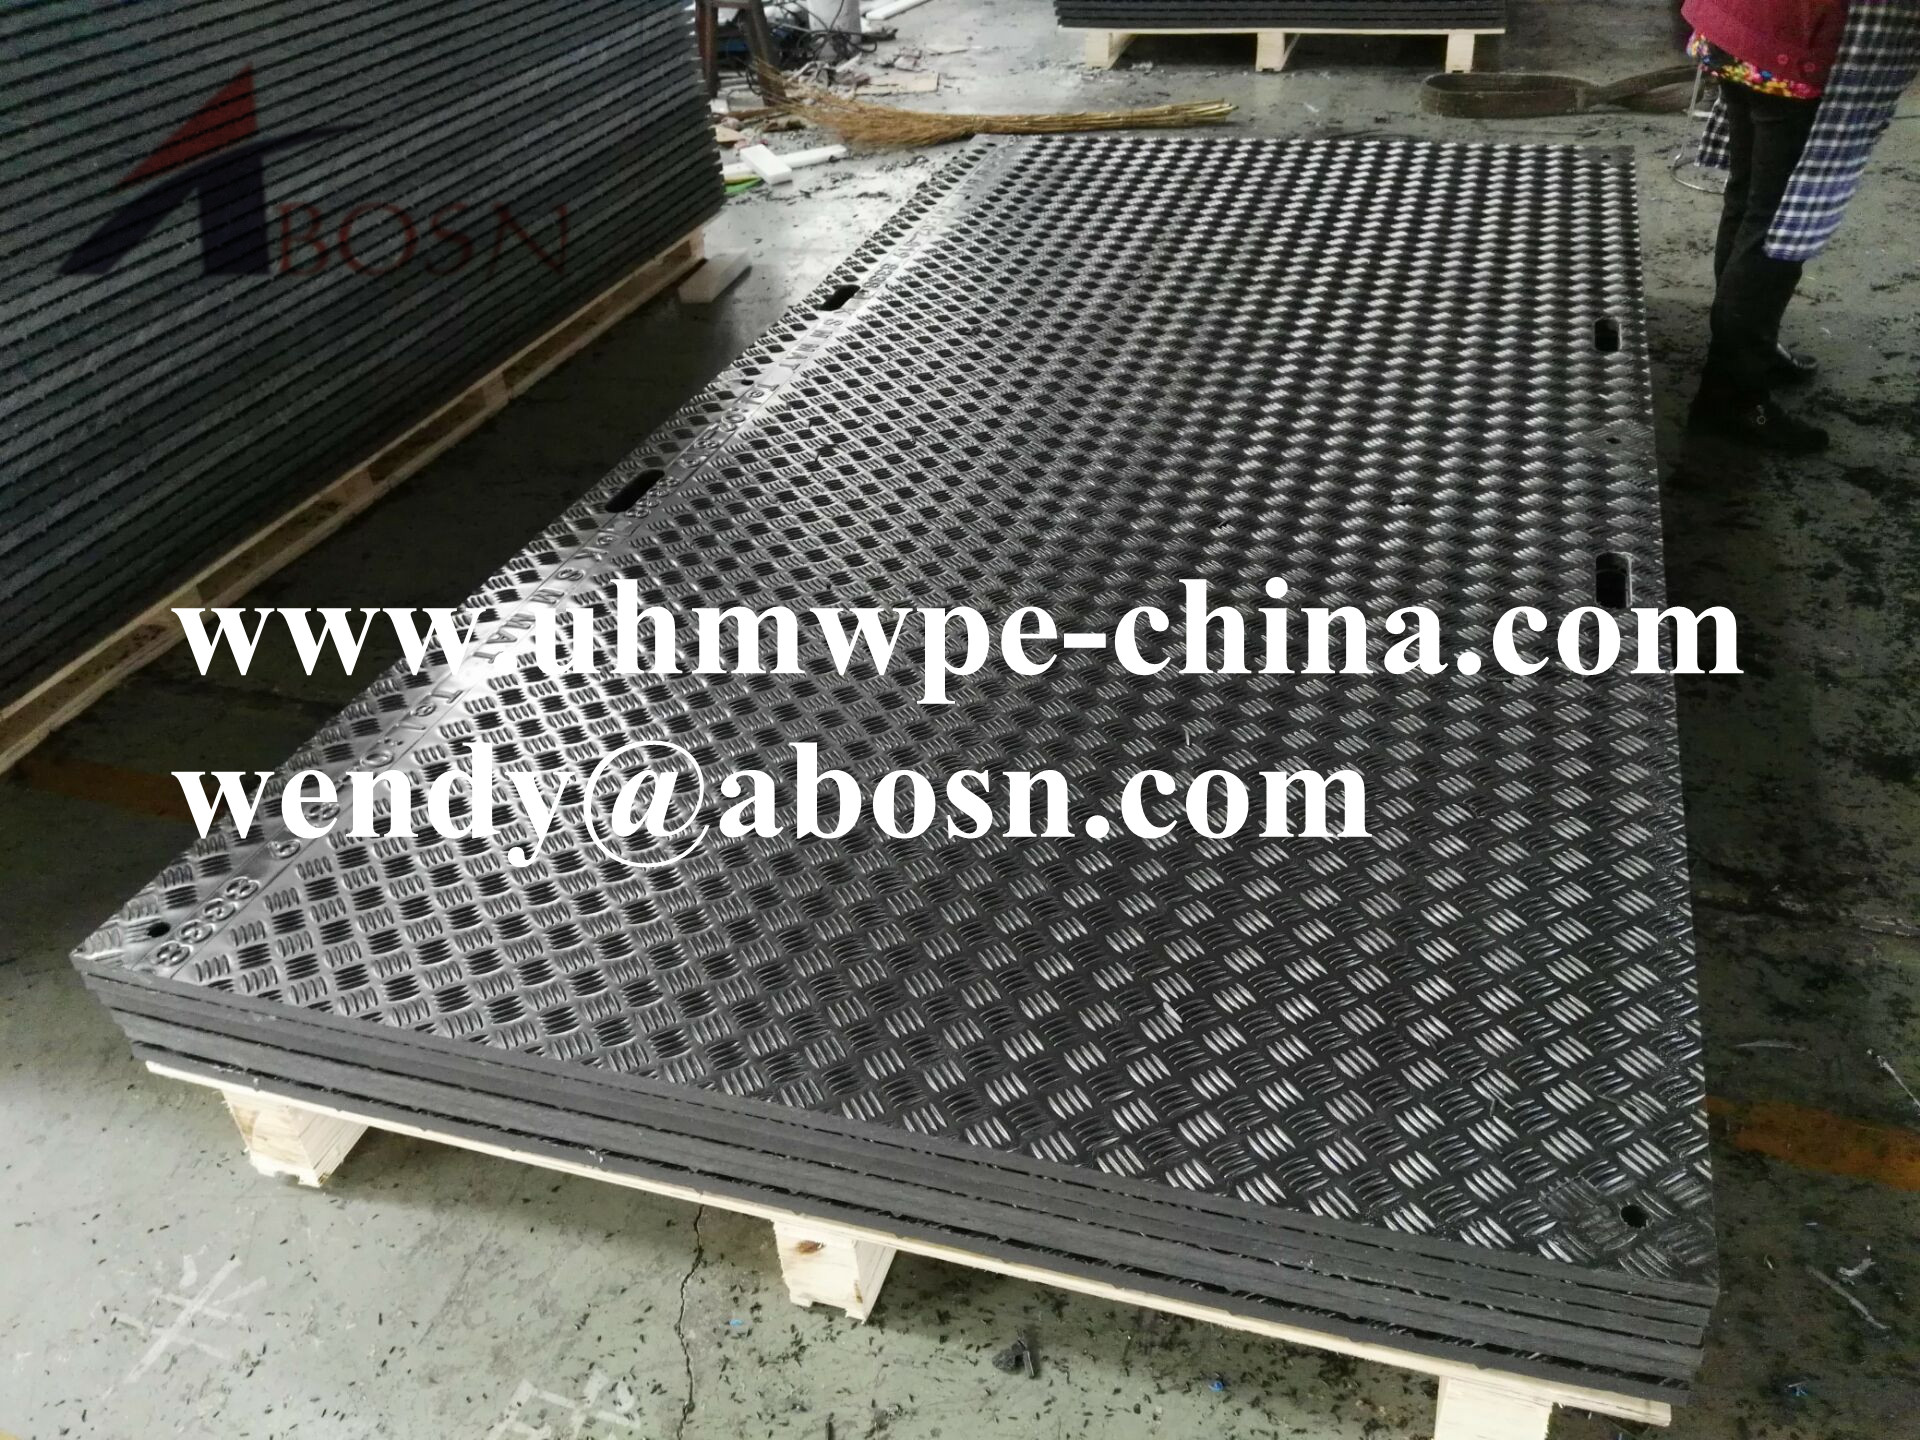 High Density Polyethylene Flooring Mat for Pathway